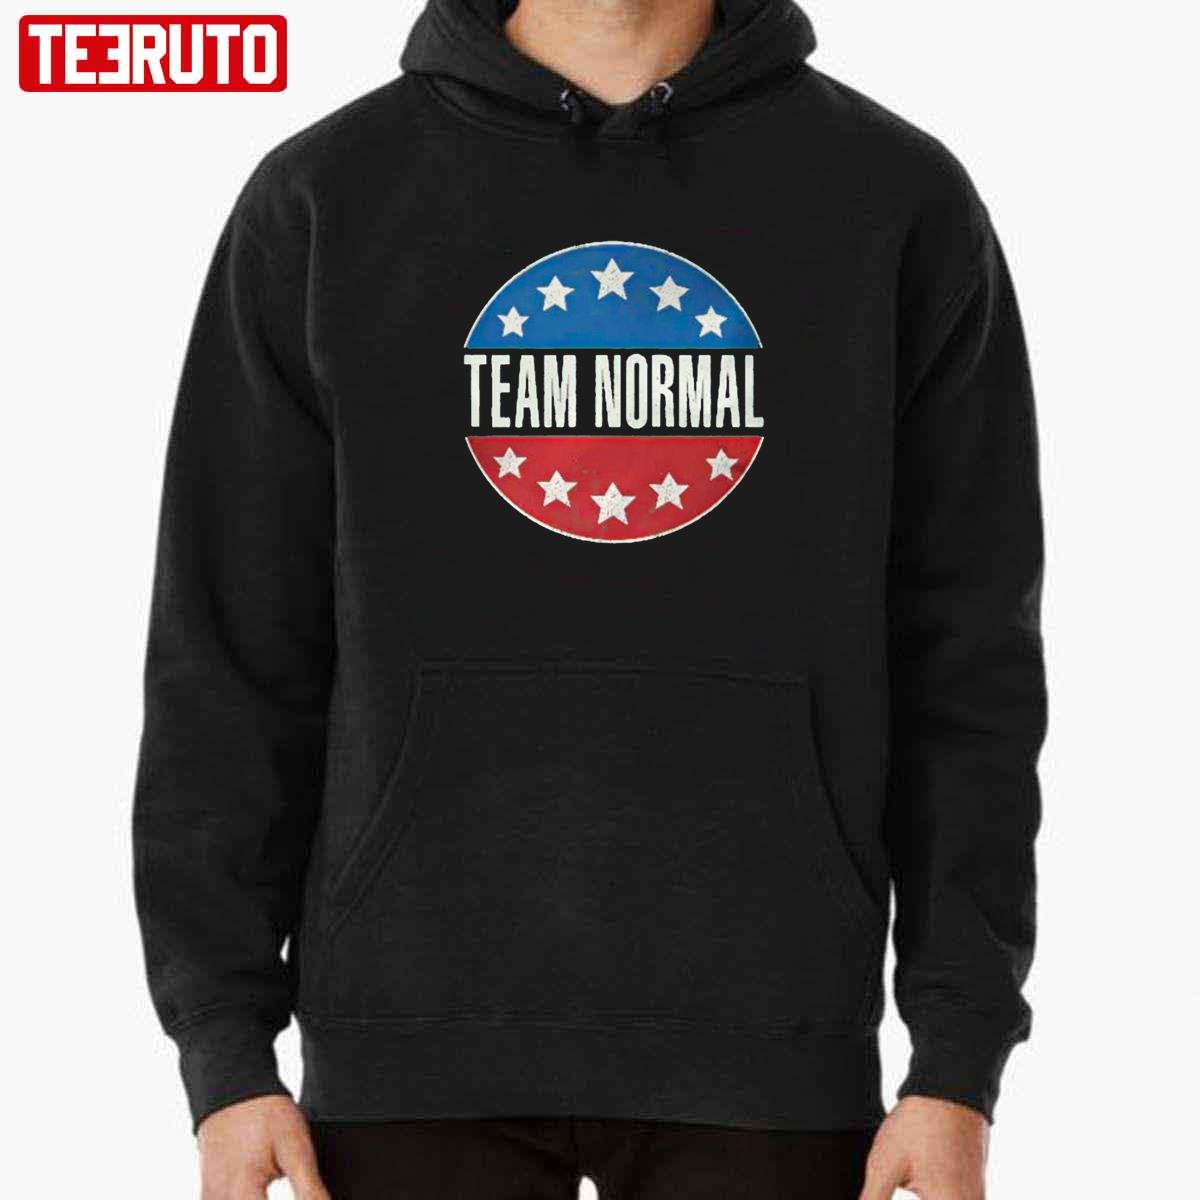 Retro Team Normal Unisex Sweatshirt